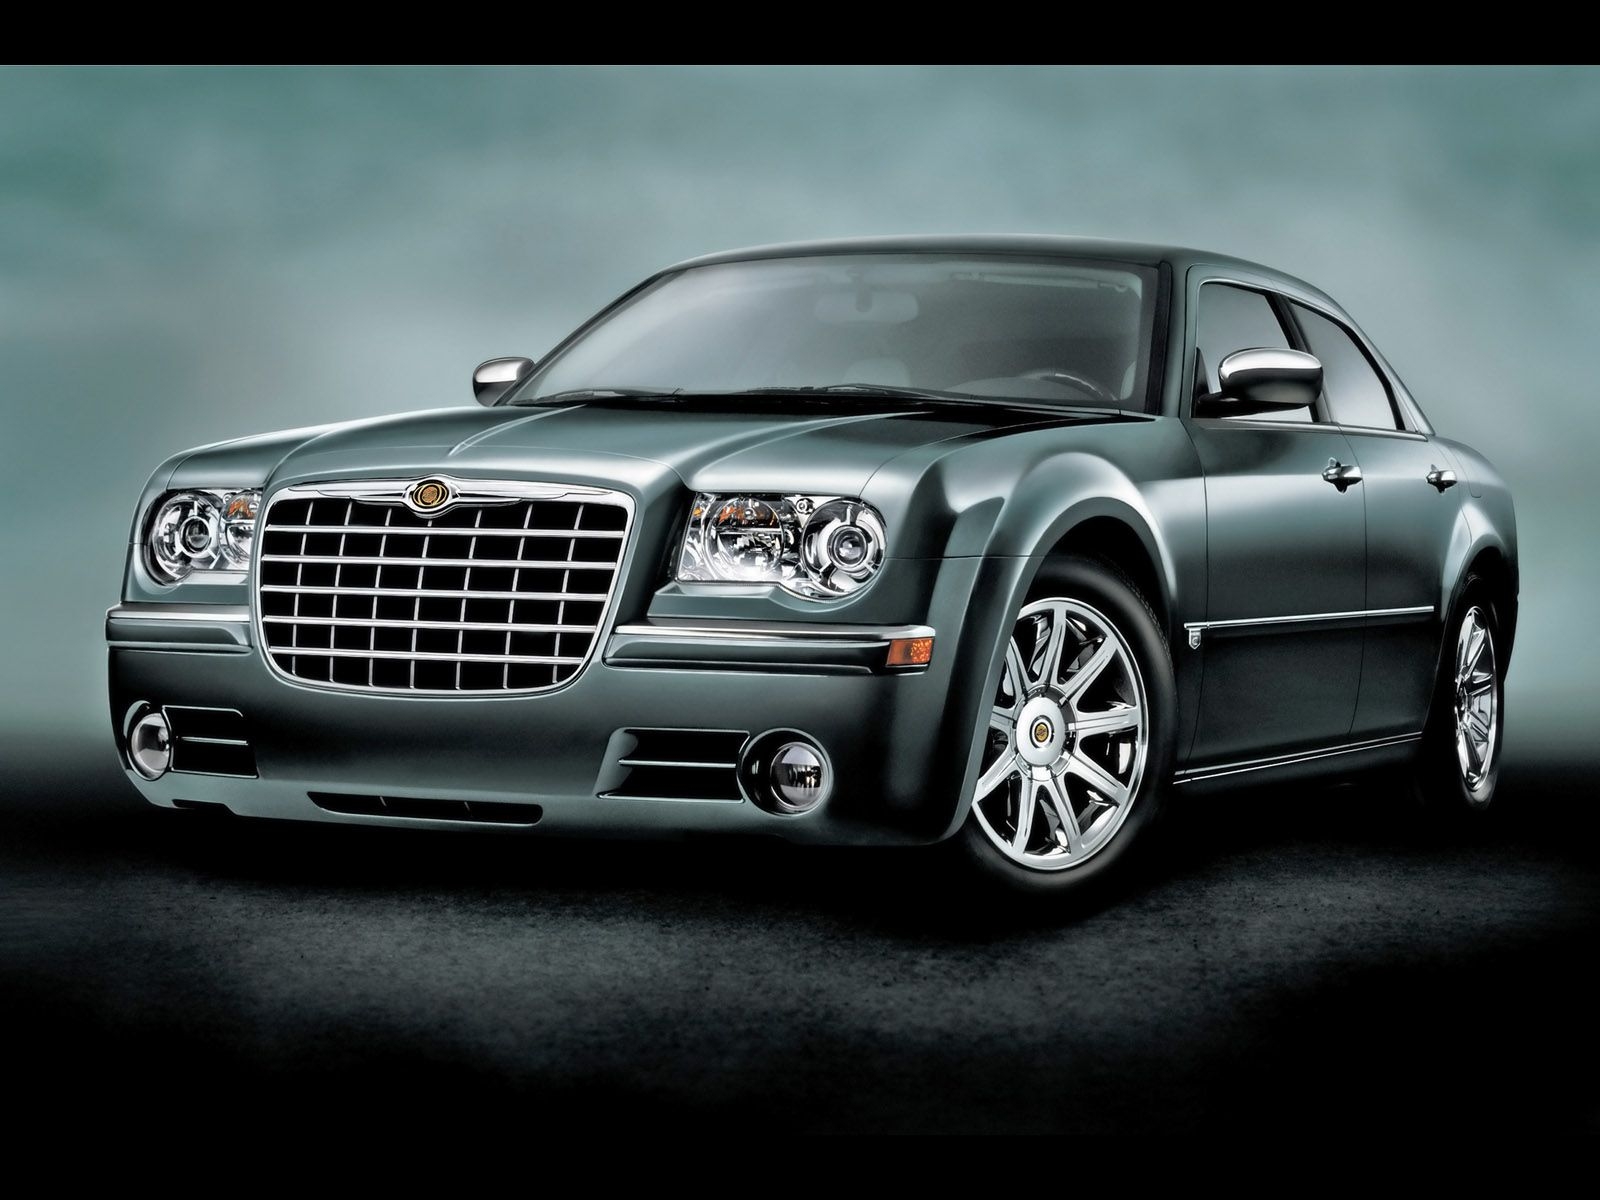 Chrysler Cars HD Wallpaper Background Image Photos